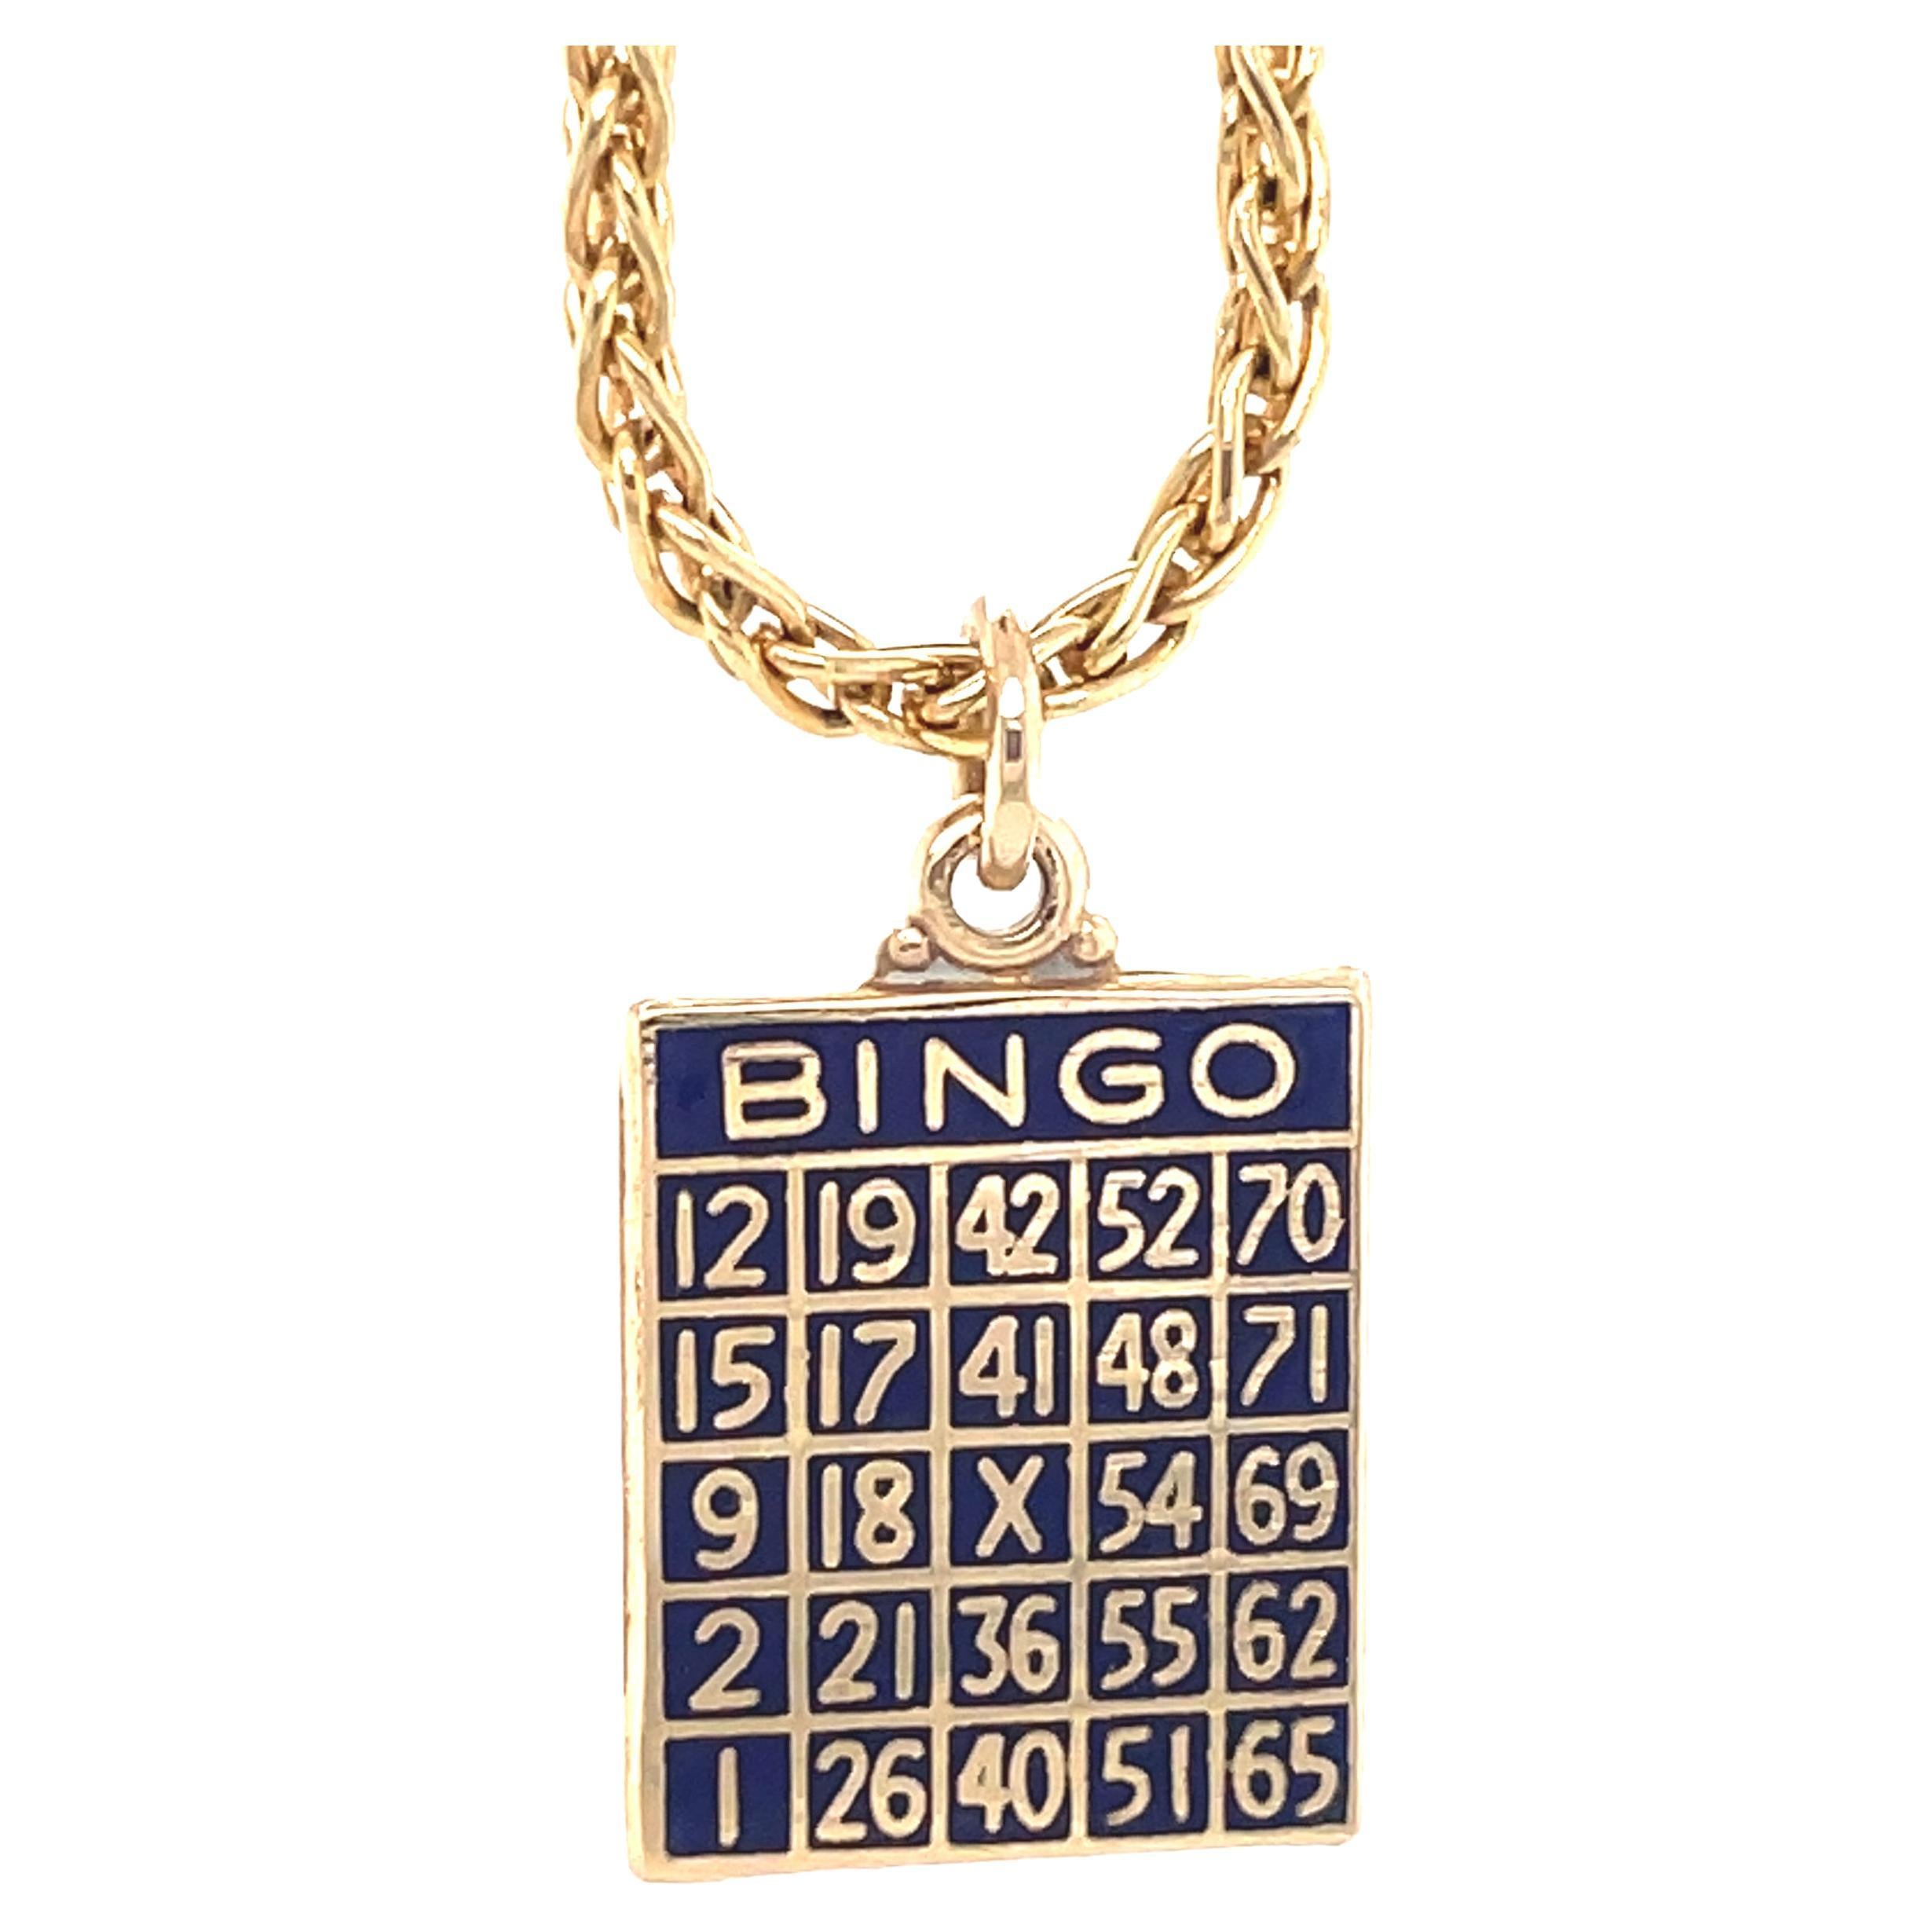 Bingo Gold & Enamel Charm For Sale